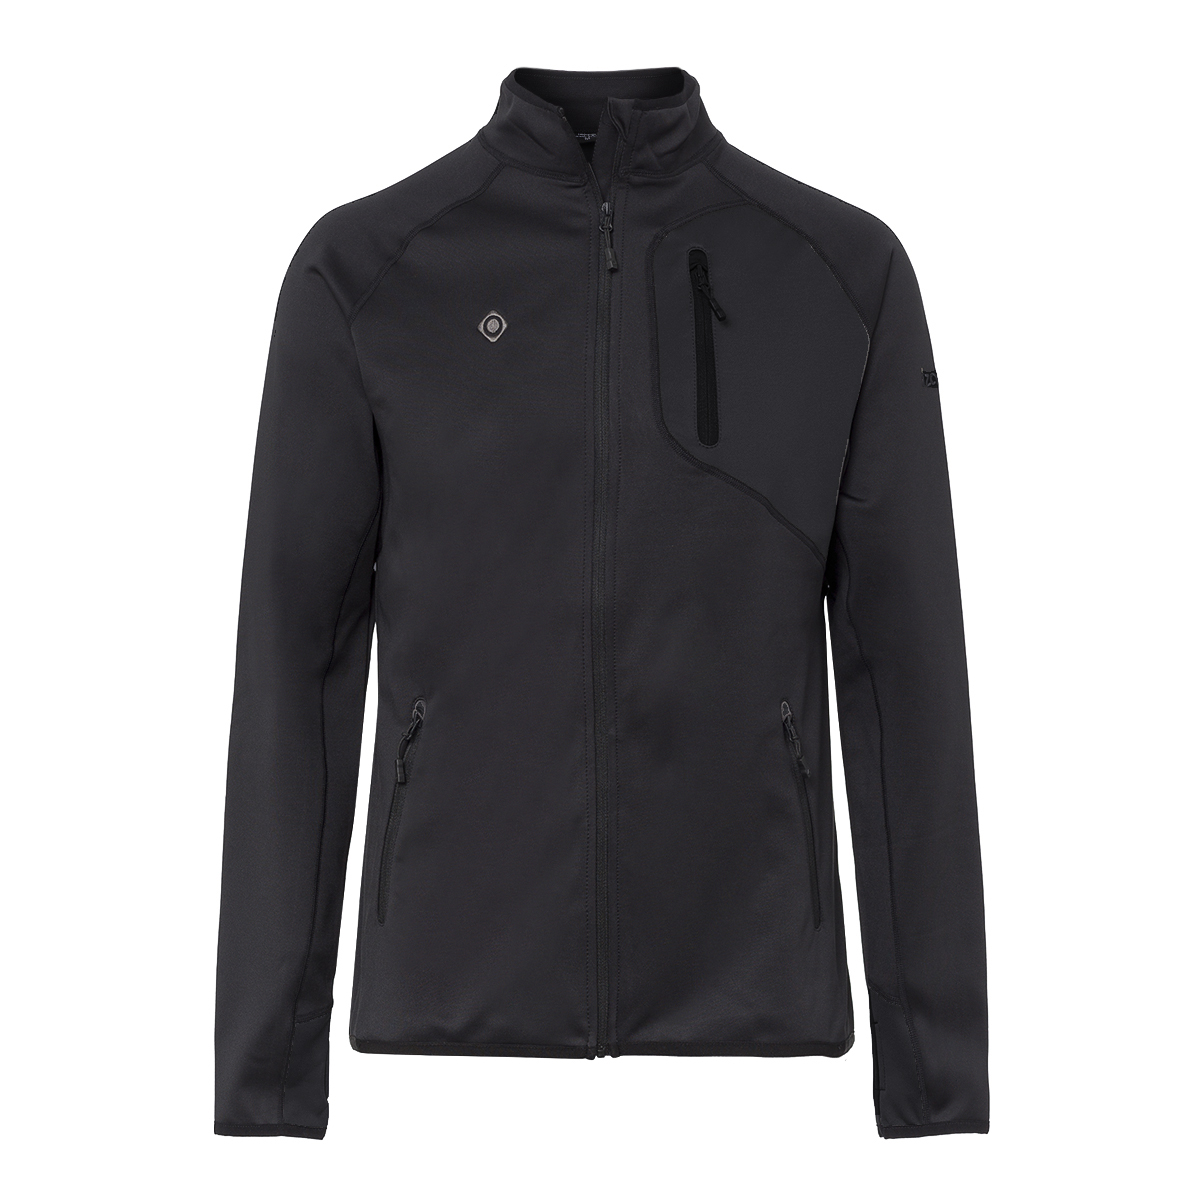 Izas Kanjut Men's Full Zip Polar Stretch Jacket (Medium, Black/Black) - image 1 of 1